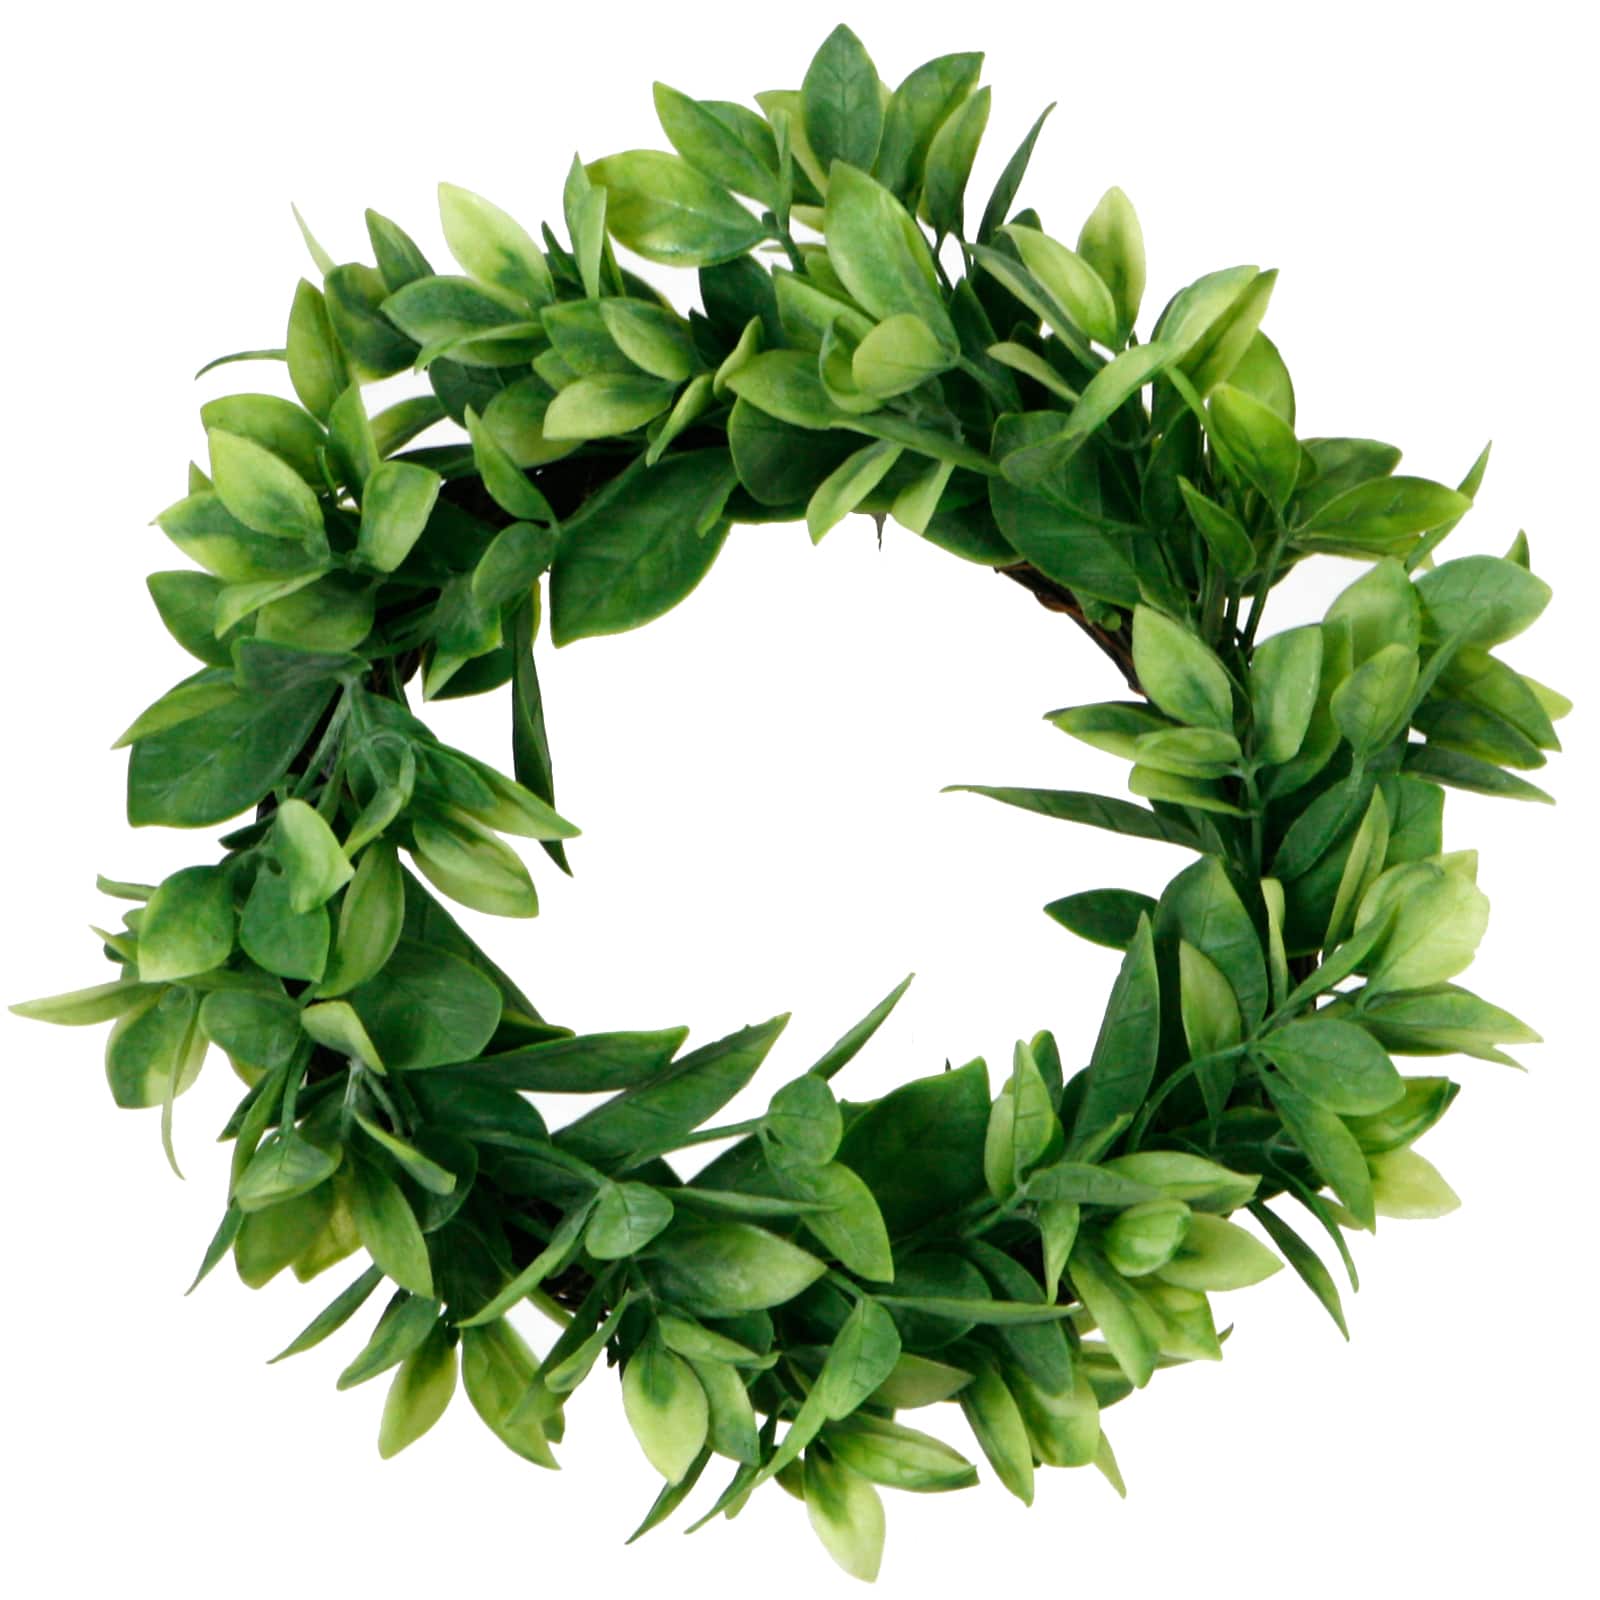 Small green wreath